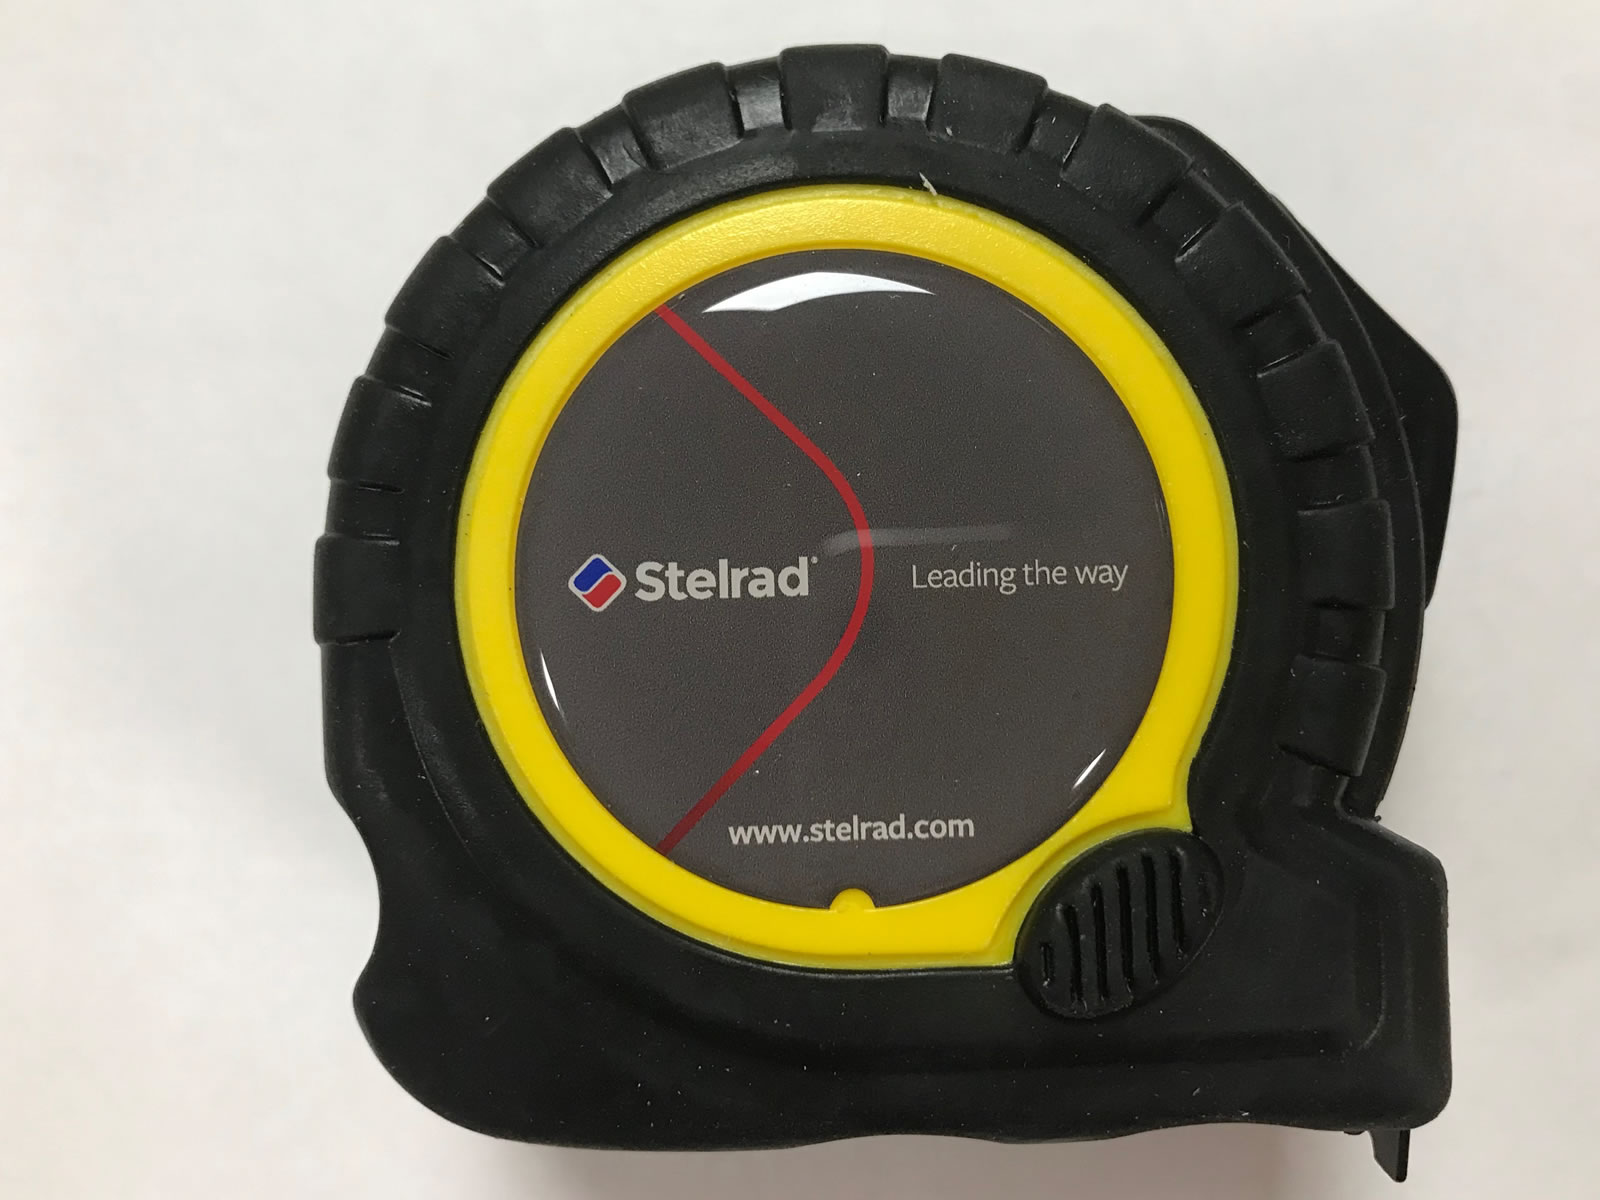 Stelrad branded tape measure loyalty reward